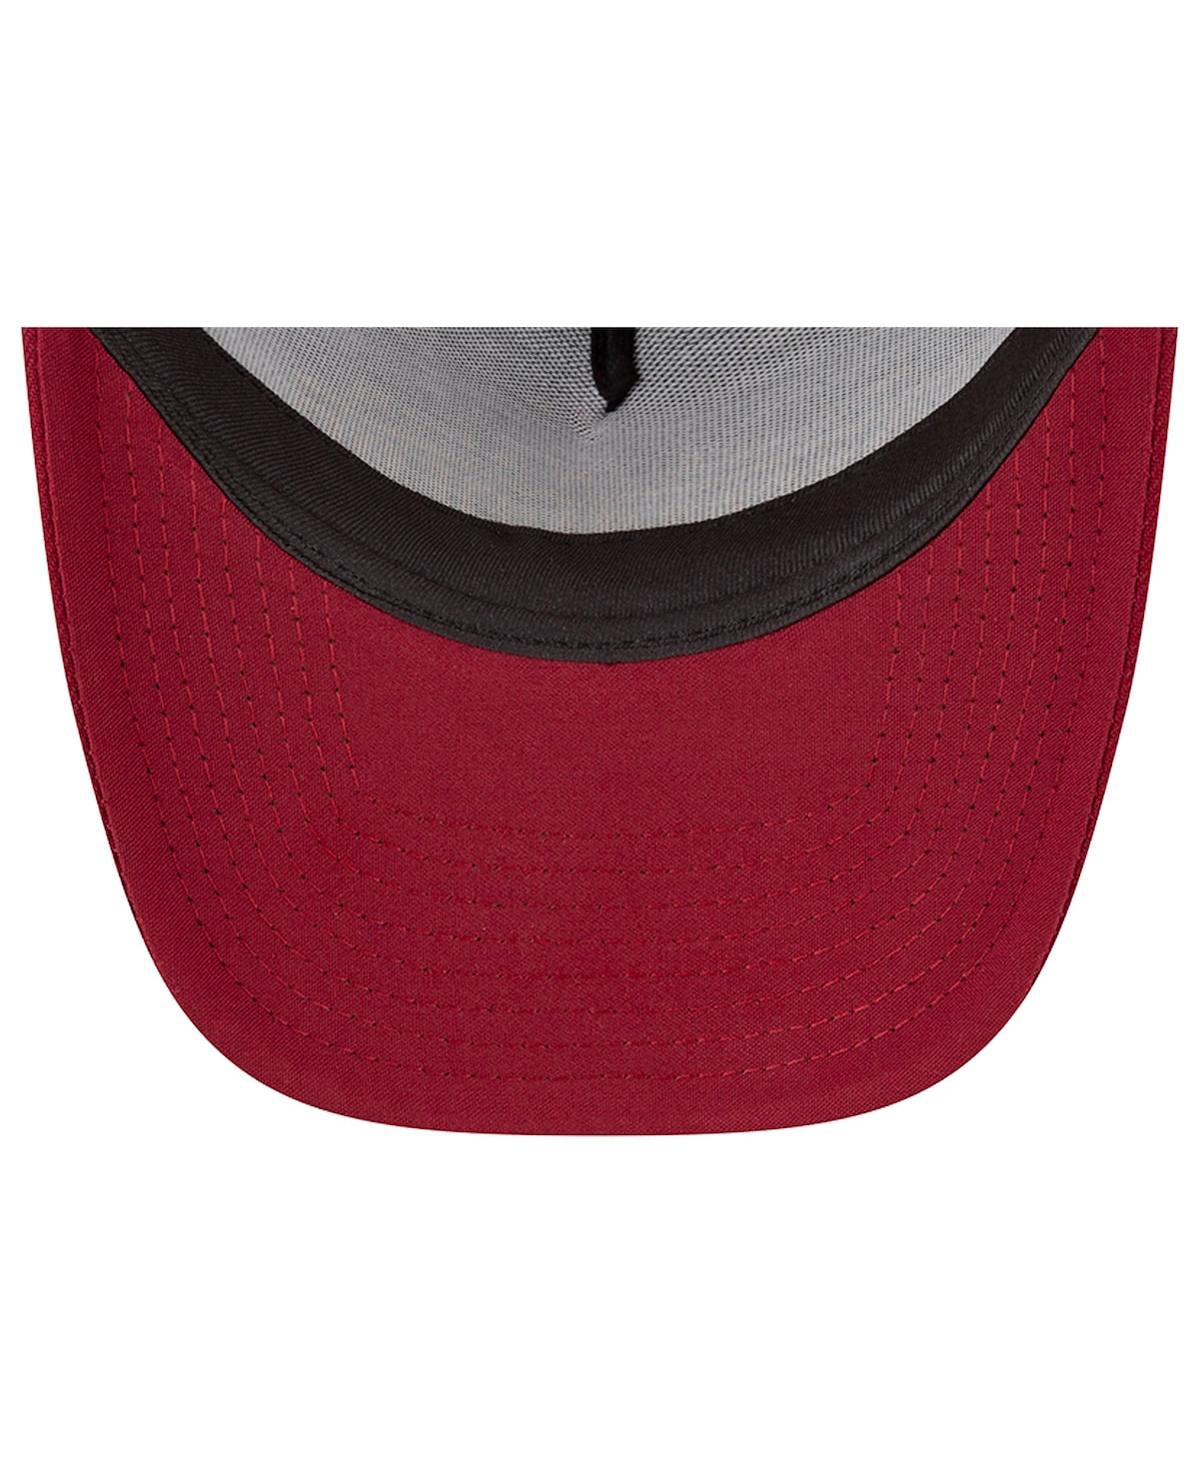 Shop New Era Men's  Burgundy Washington Commanders A-frame Trucker 9forty Adjustable Hat